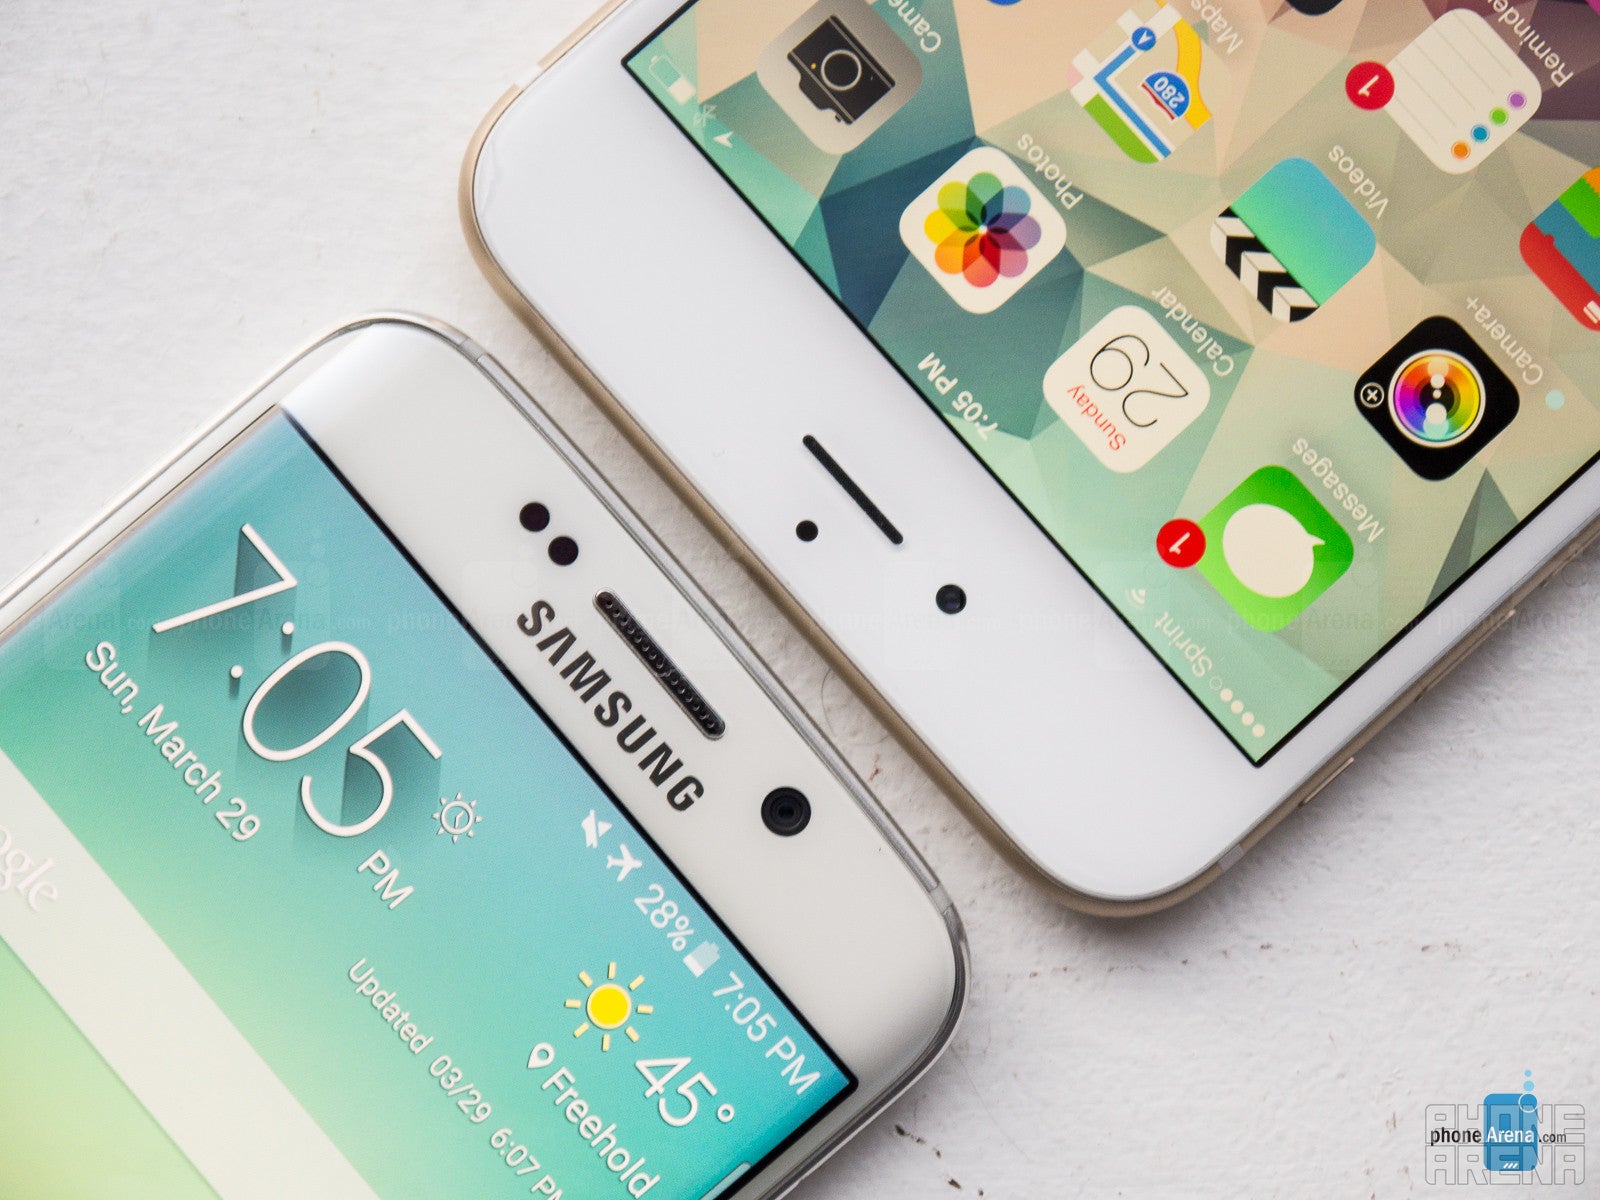 Samsung Galaxy S6 edge vs Apple iPhone 6 Plus